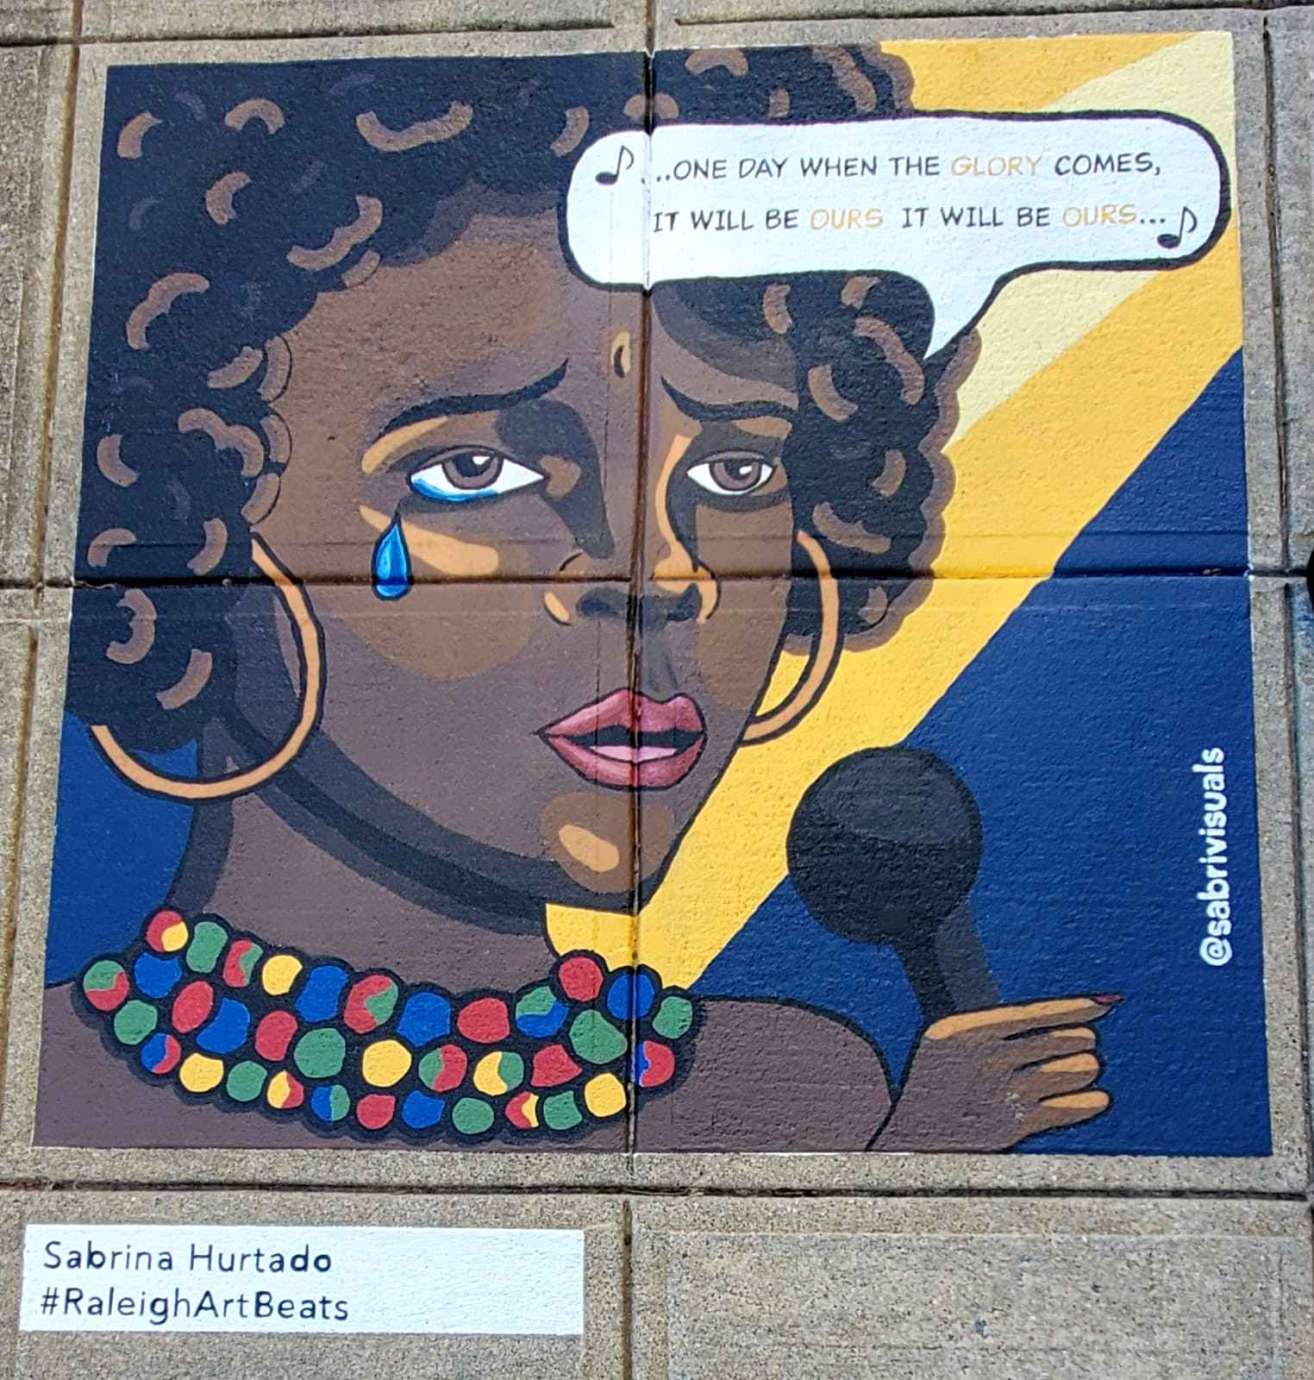 Sidewalk mural by artist Sabrina Hurtado